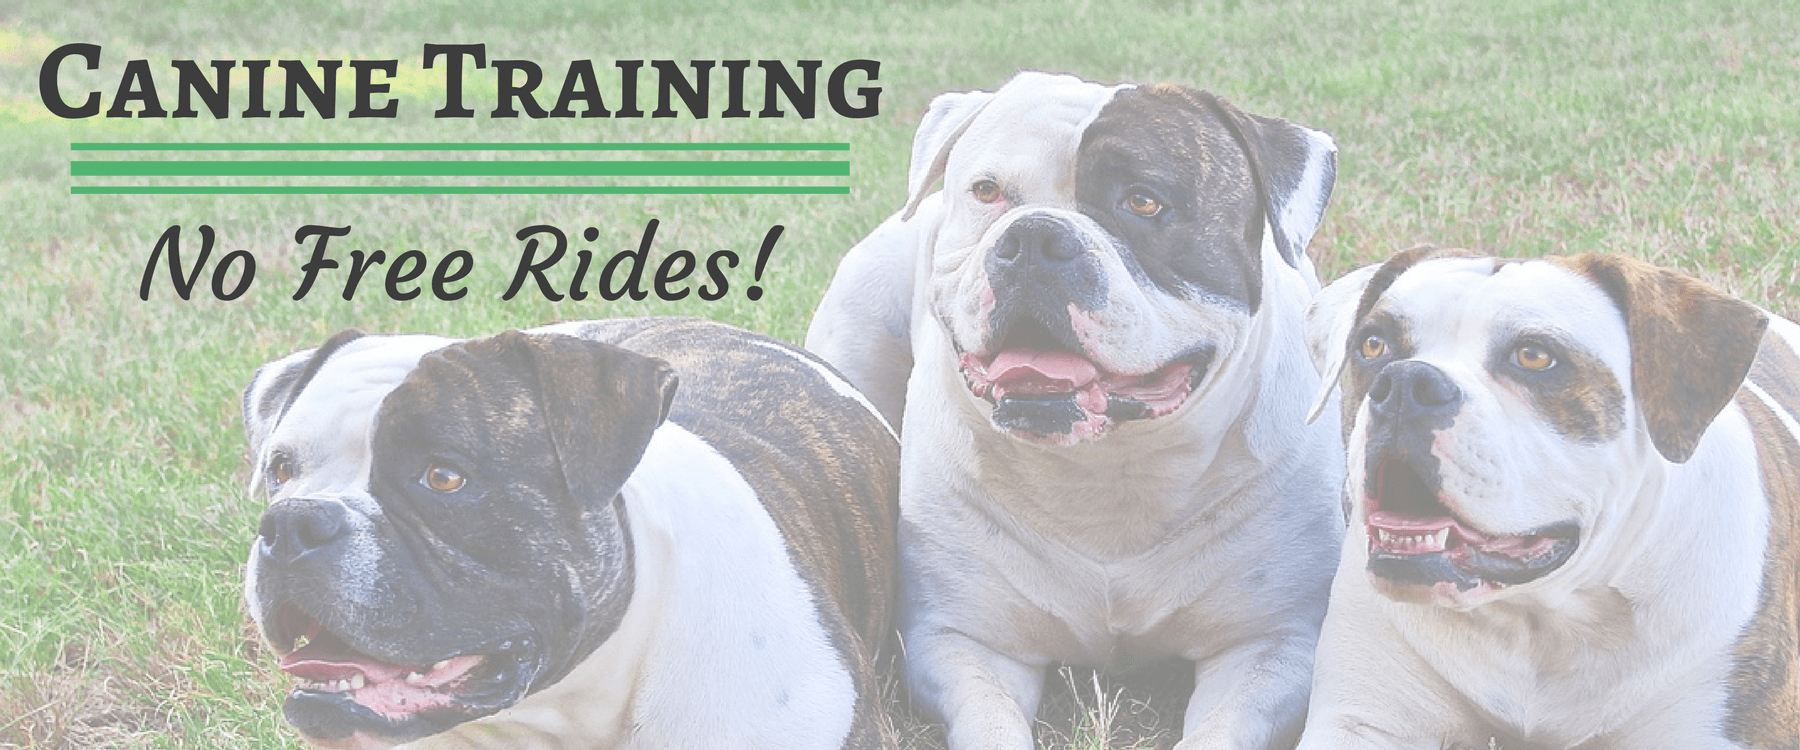 Canine Training: No Free Rides!